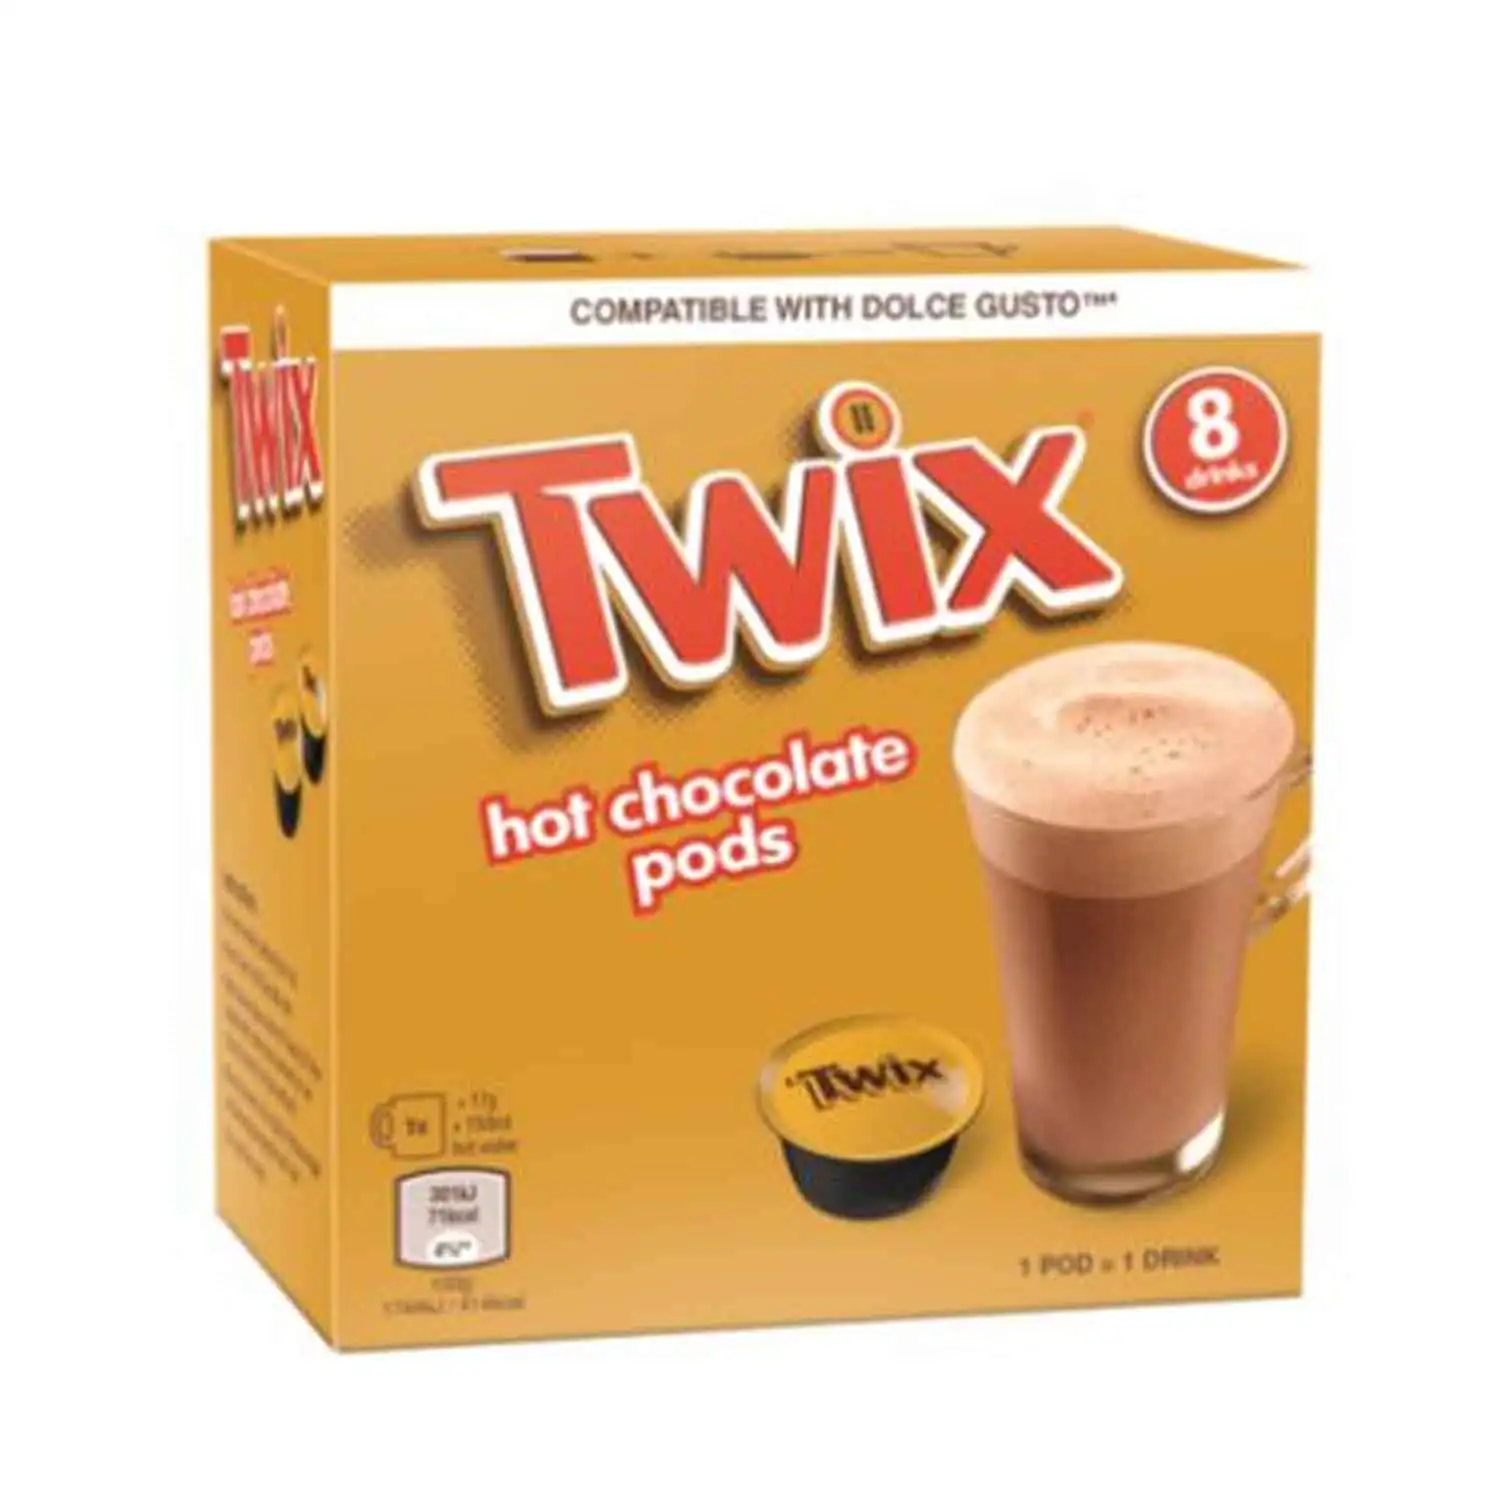 Twix hot chocolate pods 8x15g